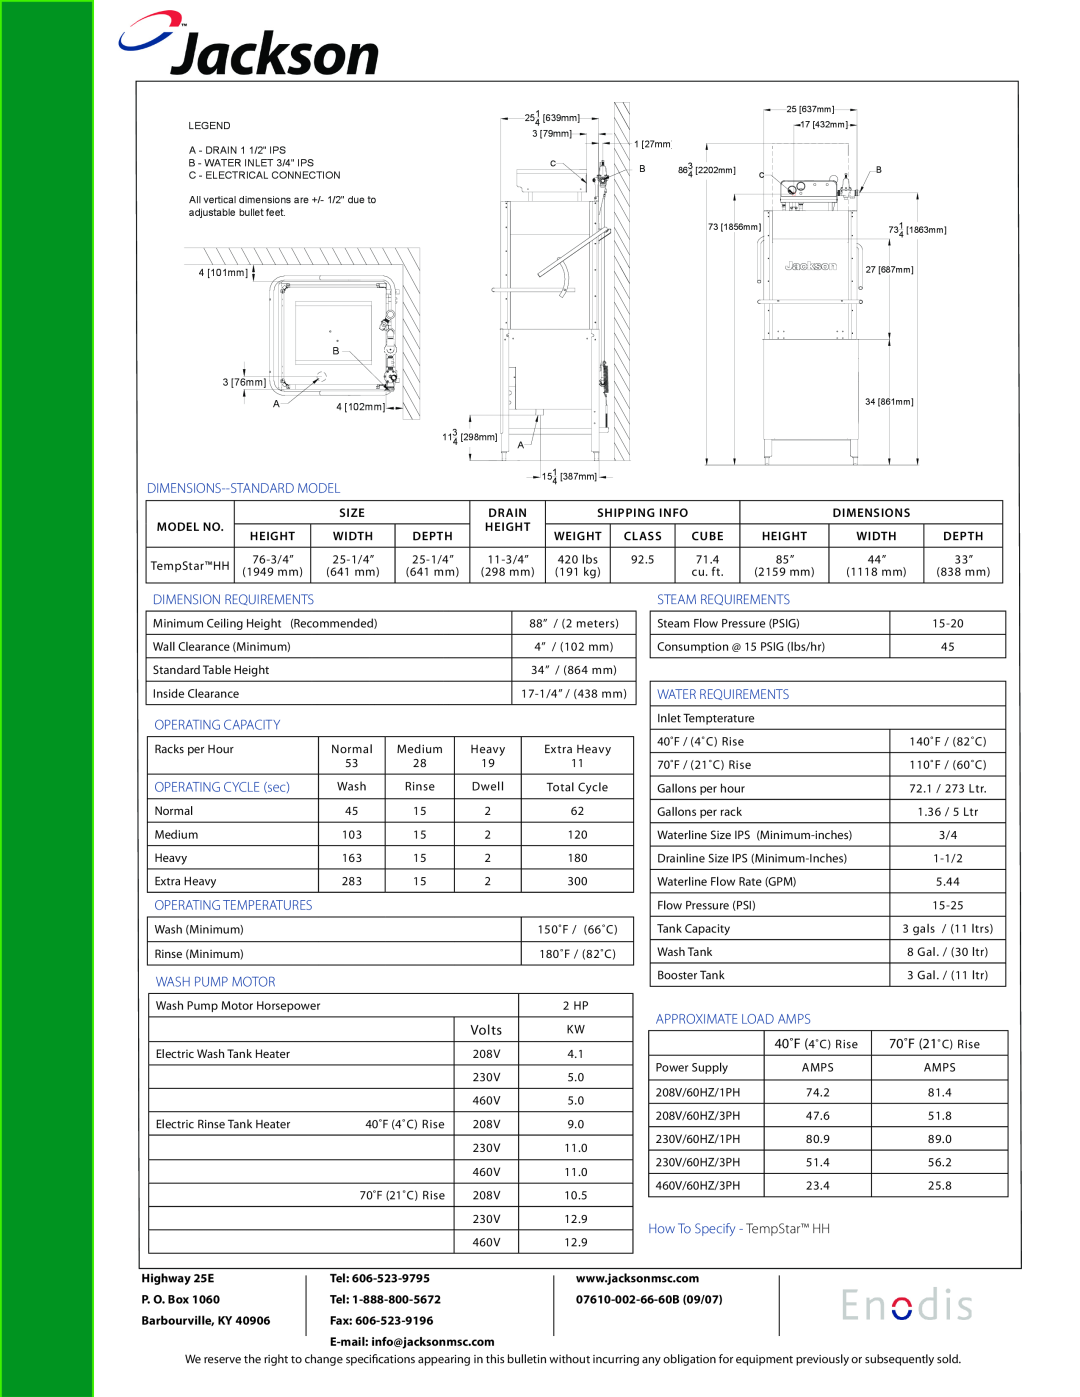 Jackson TempStar HH Dimensions--Standard Model, Dimension Requirements, Operating Capacity, Wash Pump Motor, Volts 